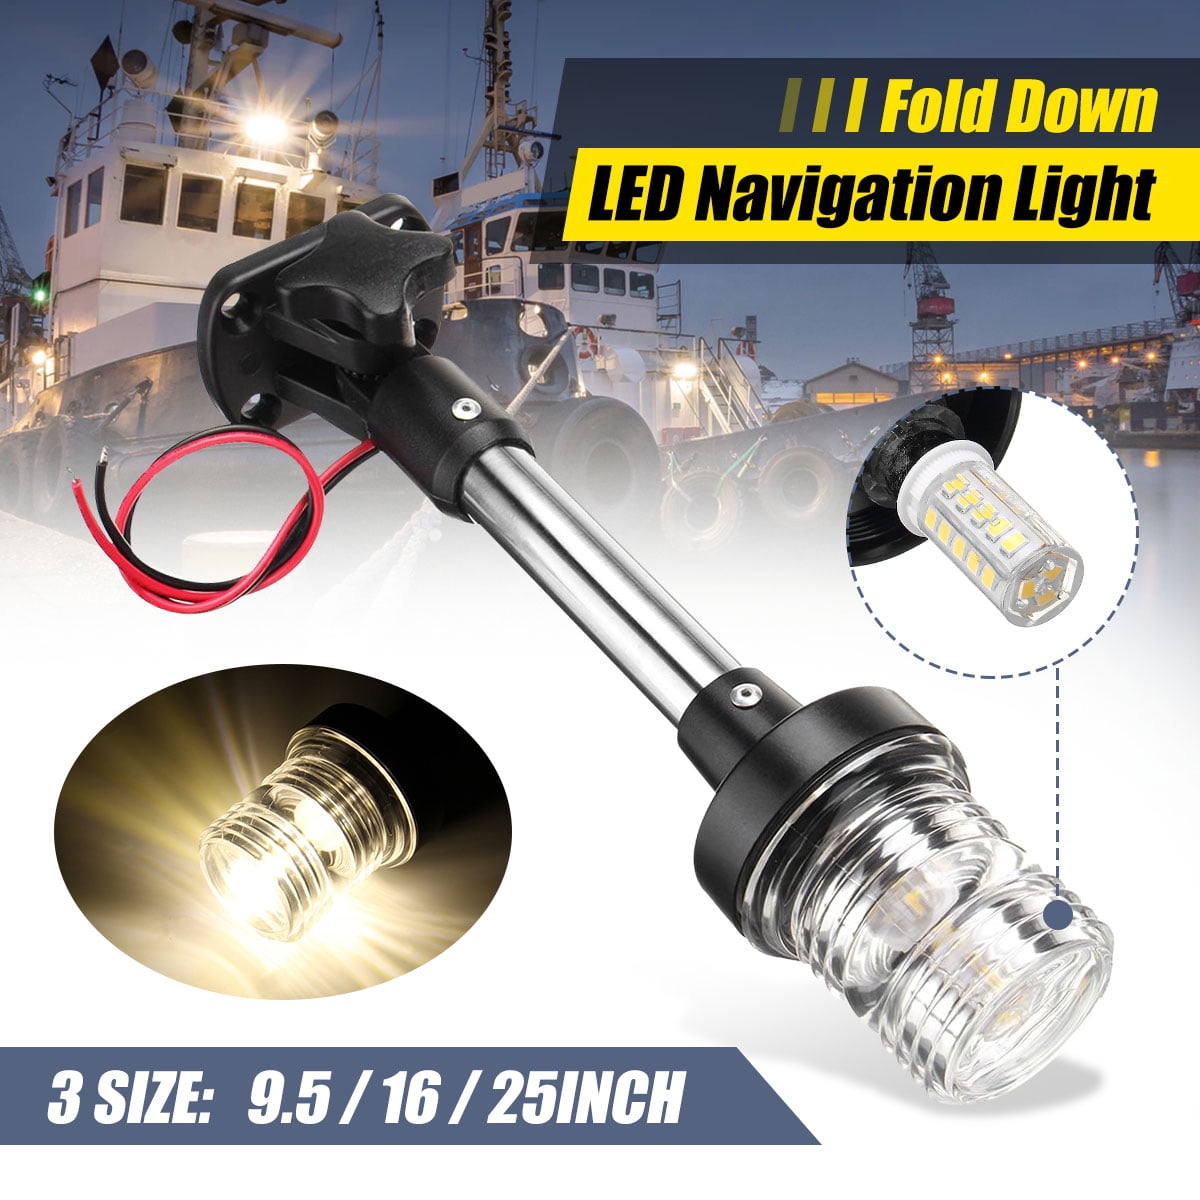 Led Fold Down Pole Light 9 Seachoice 02871